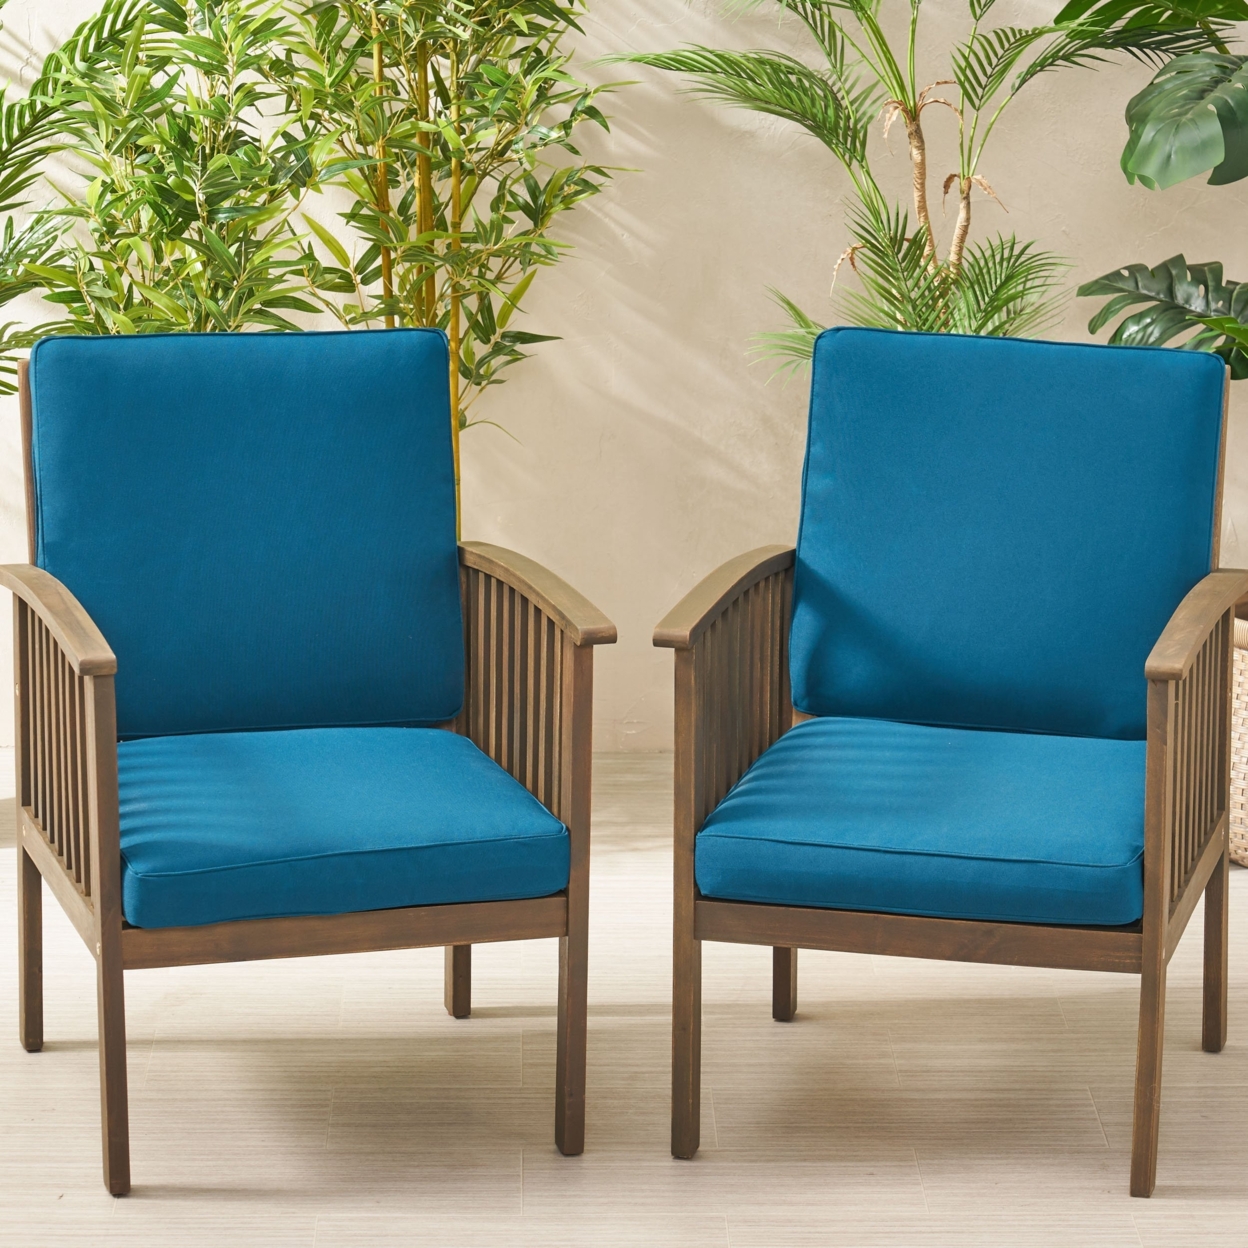 Eydan Outdoor Water Resistant Fabric Club Chair Cushions (Set Of 2) - Dark Teal